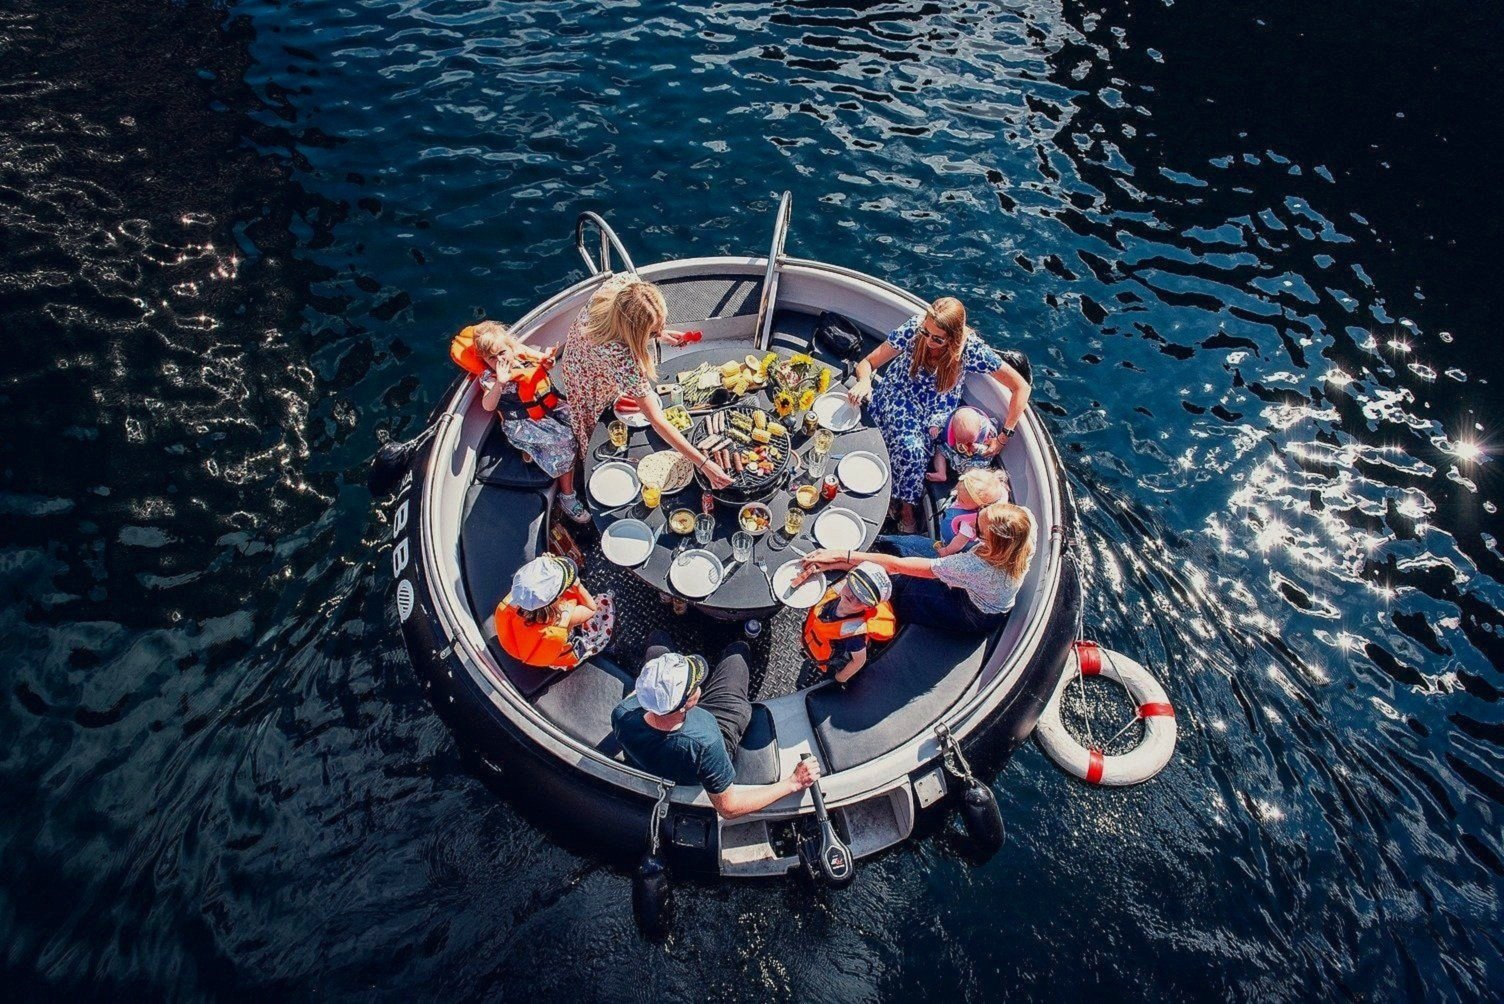 Skuna Boat Experience